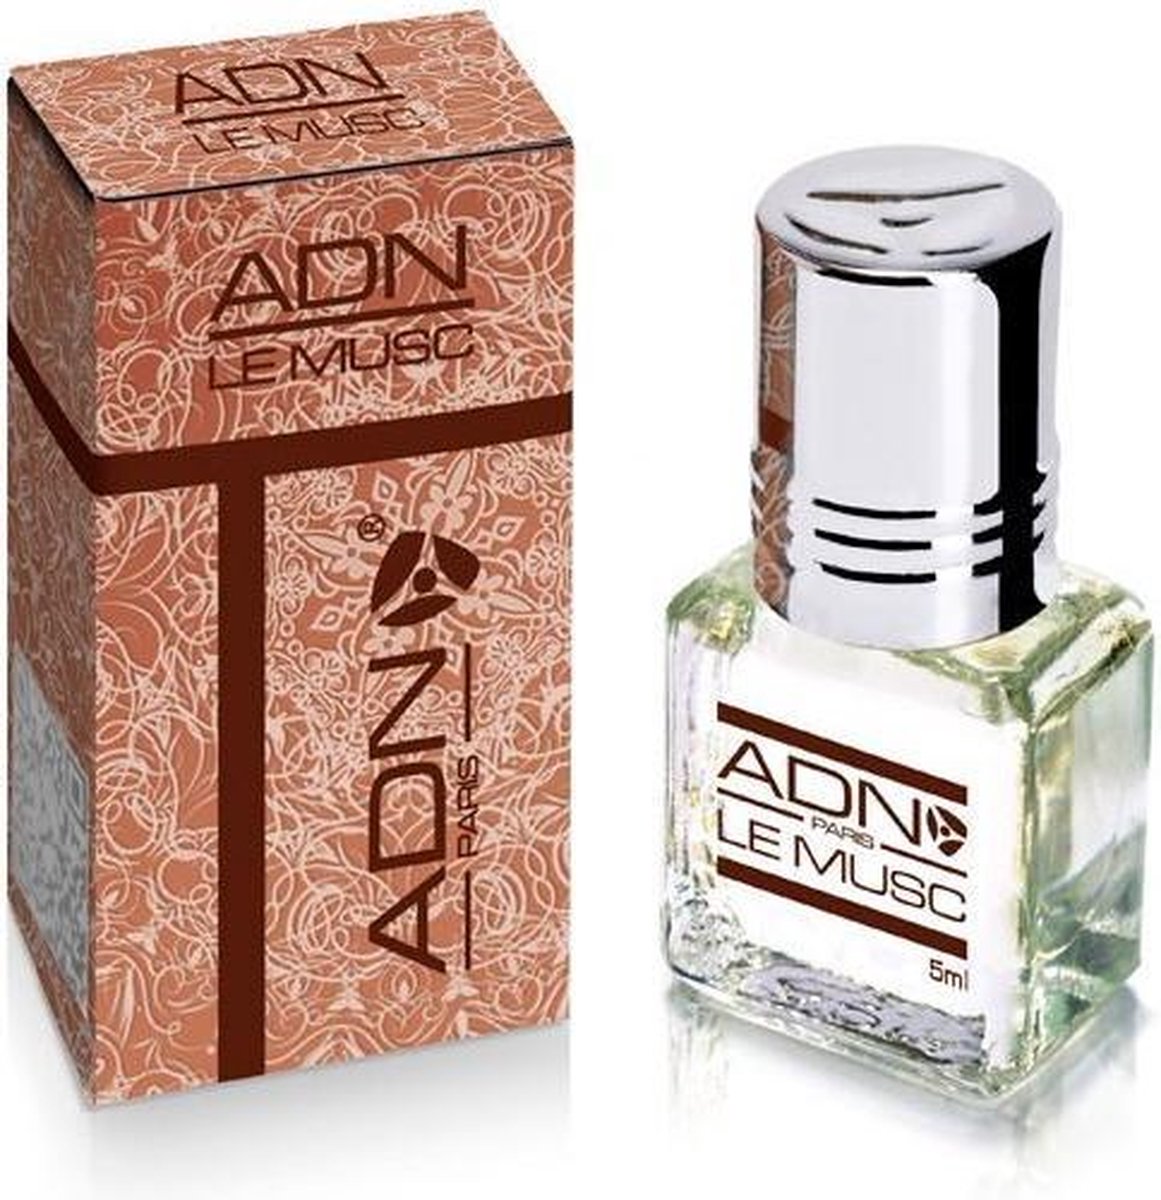 Parfum: Adn Musc - Le Musc